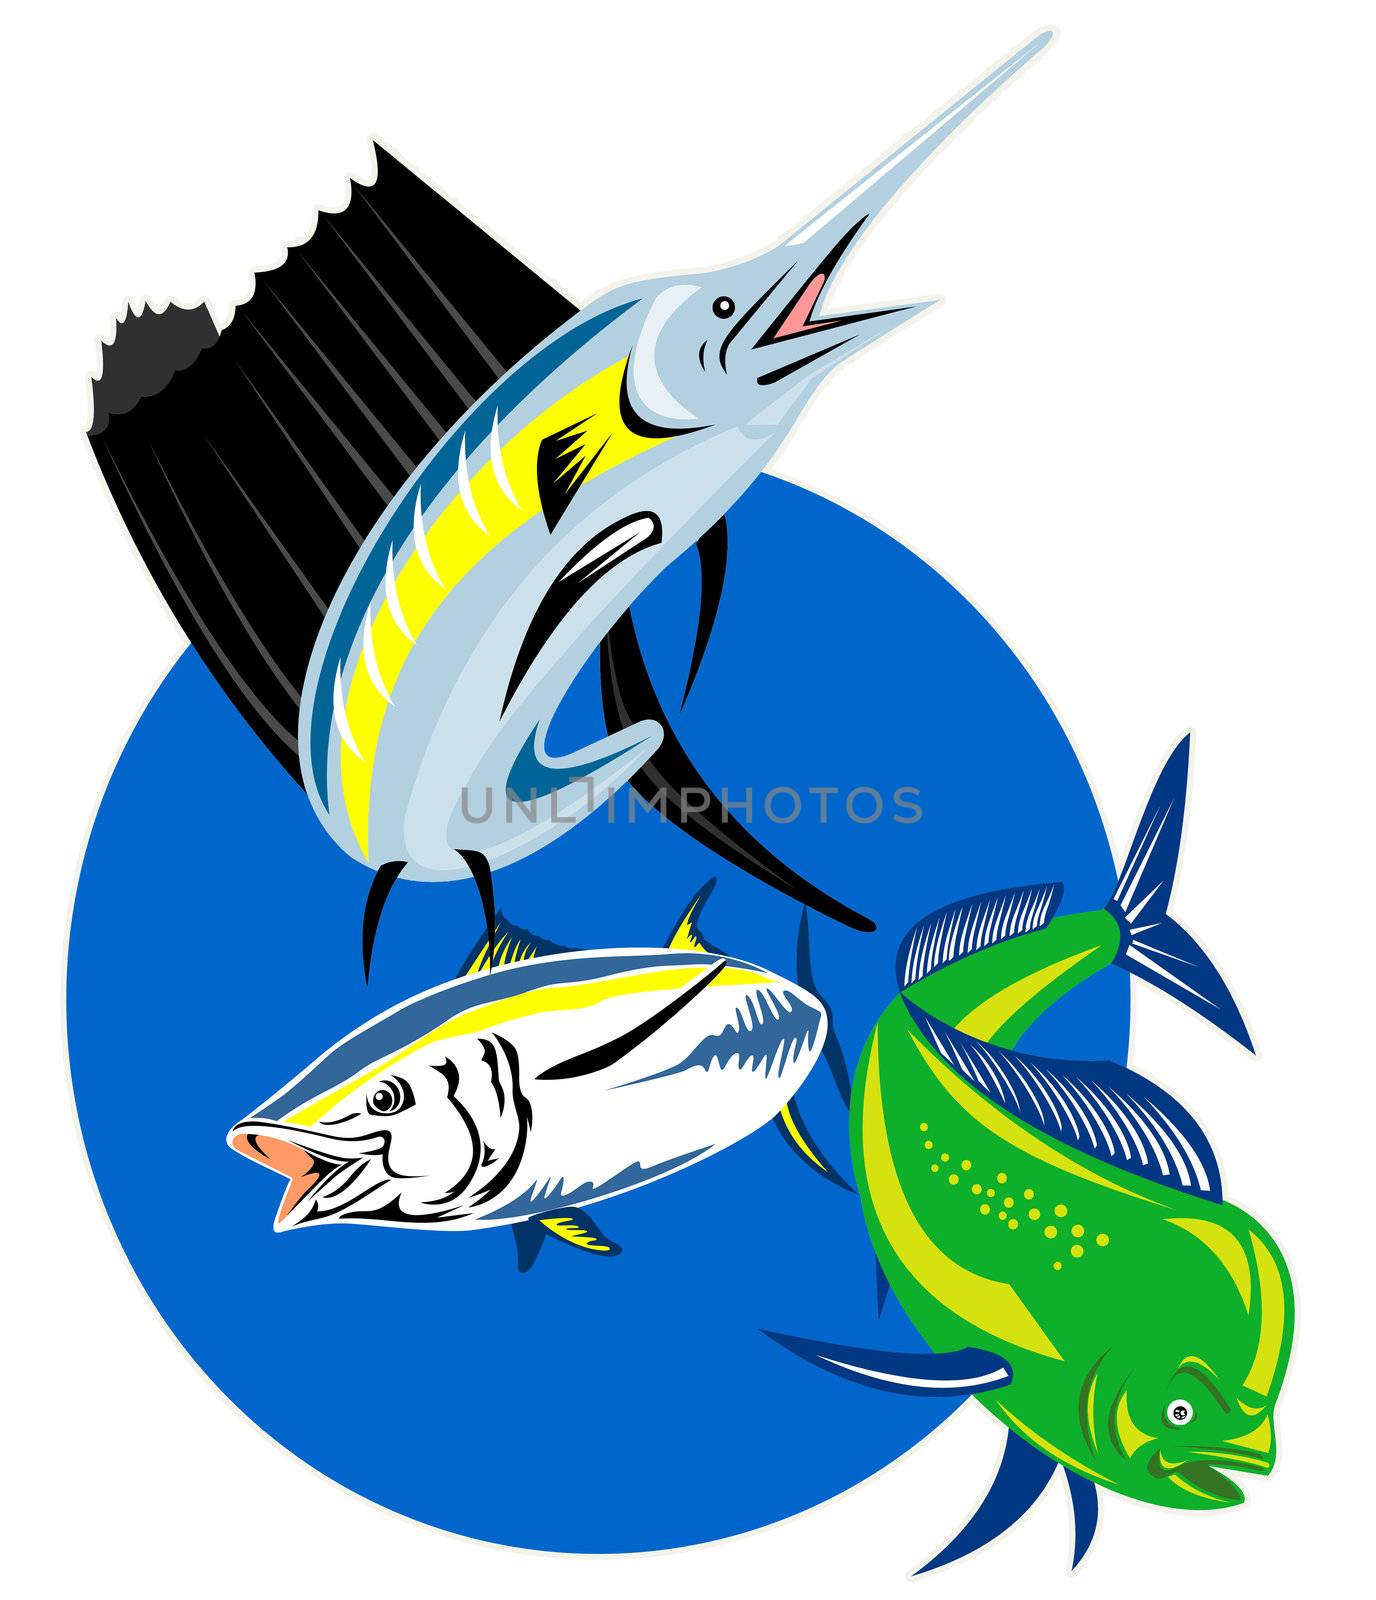 retro style illustration of a Sailfish, dorado dolphin fish or mahi-mahi and yellow fin tuna